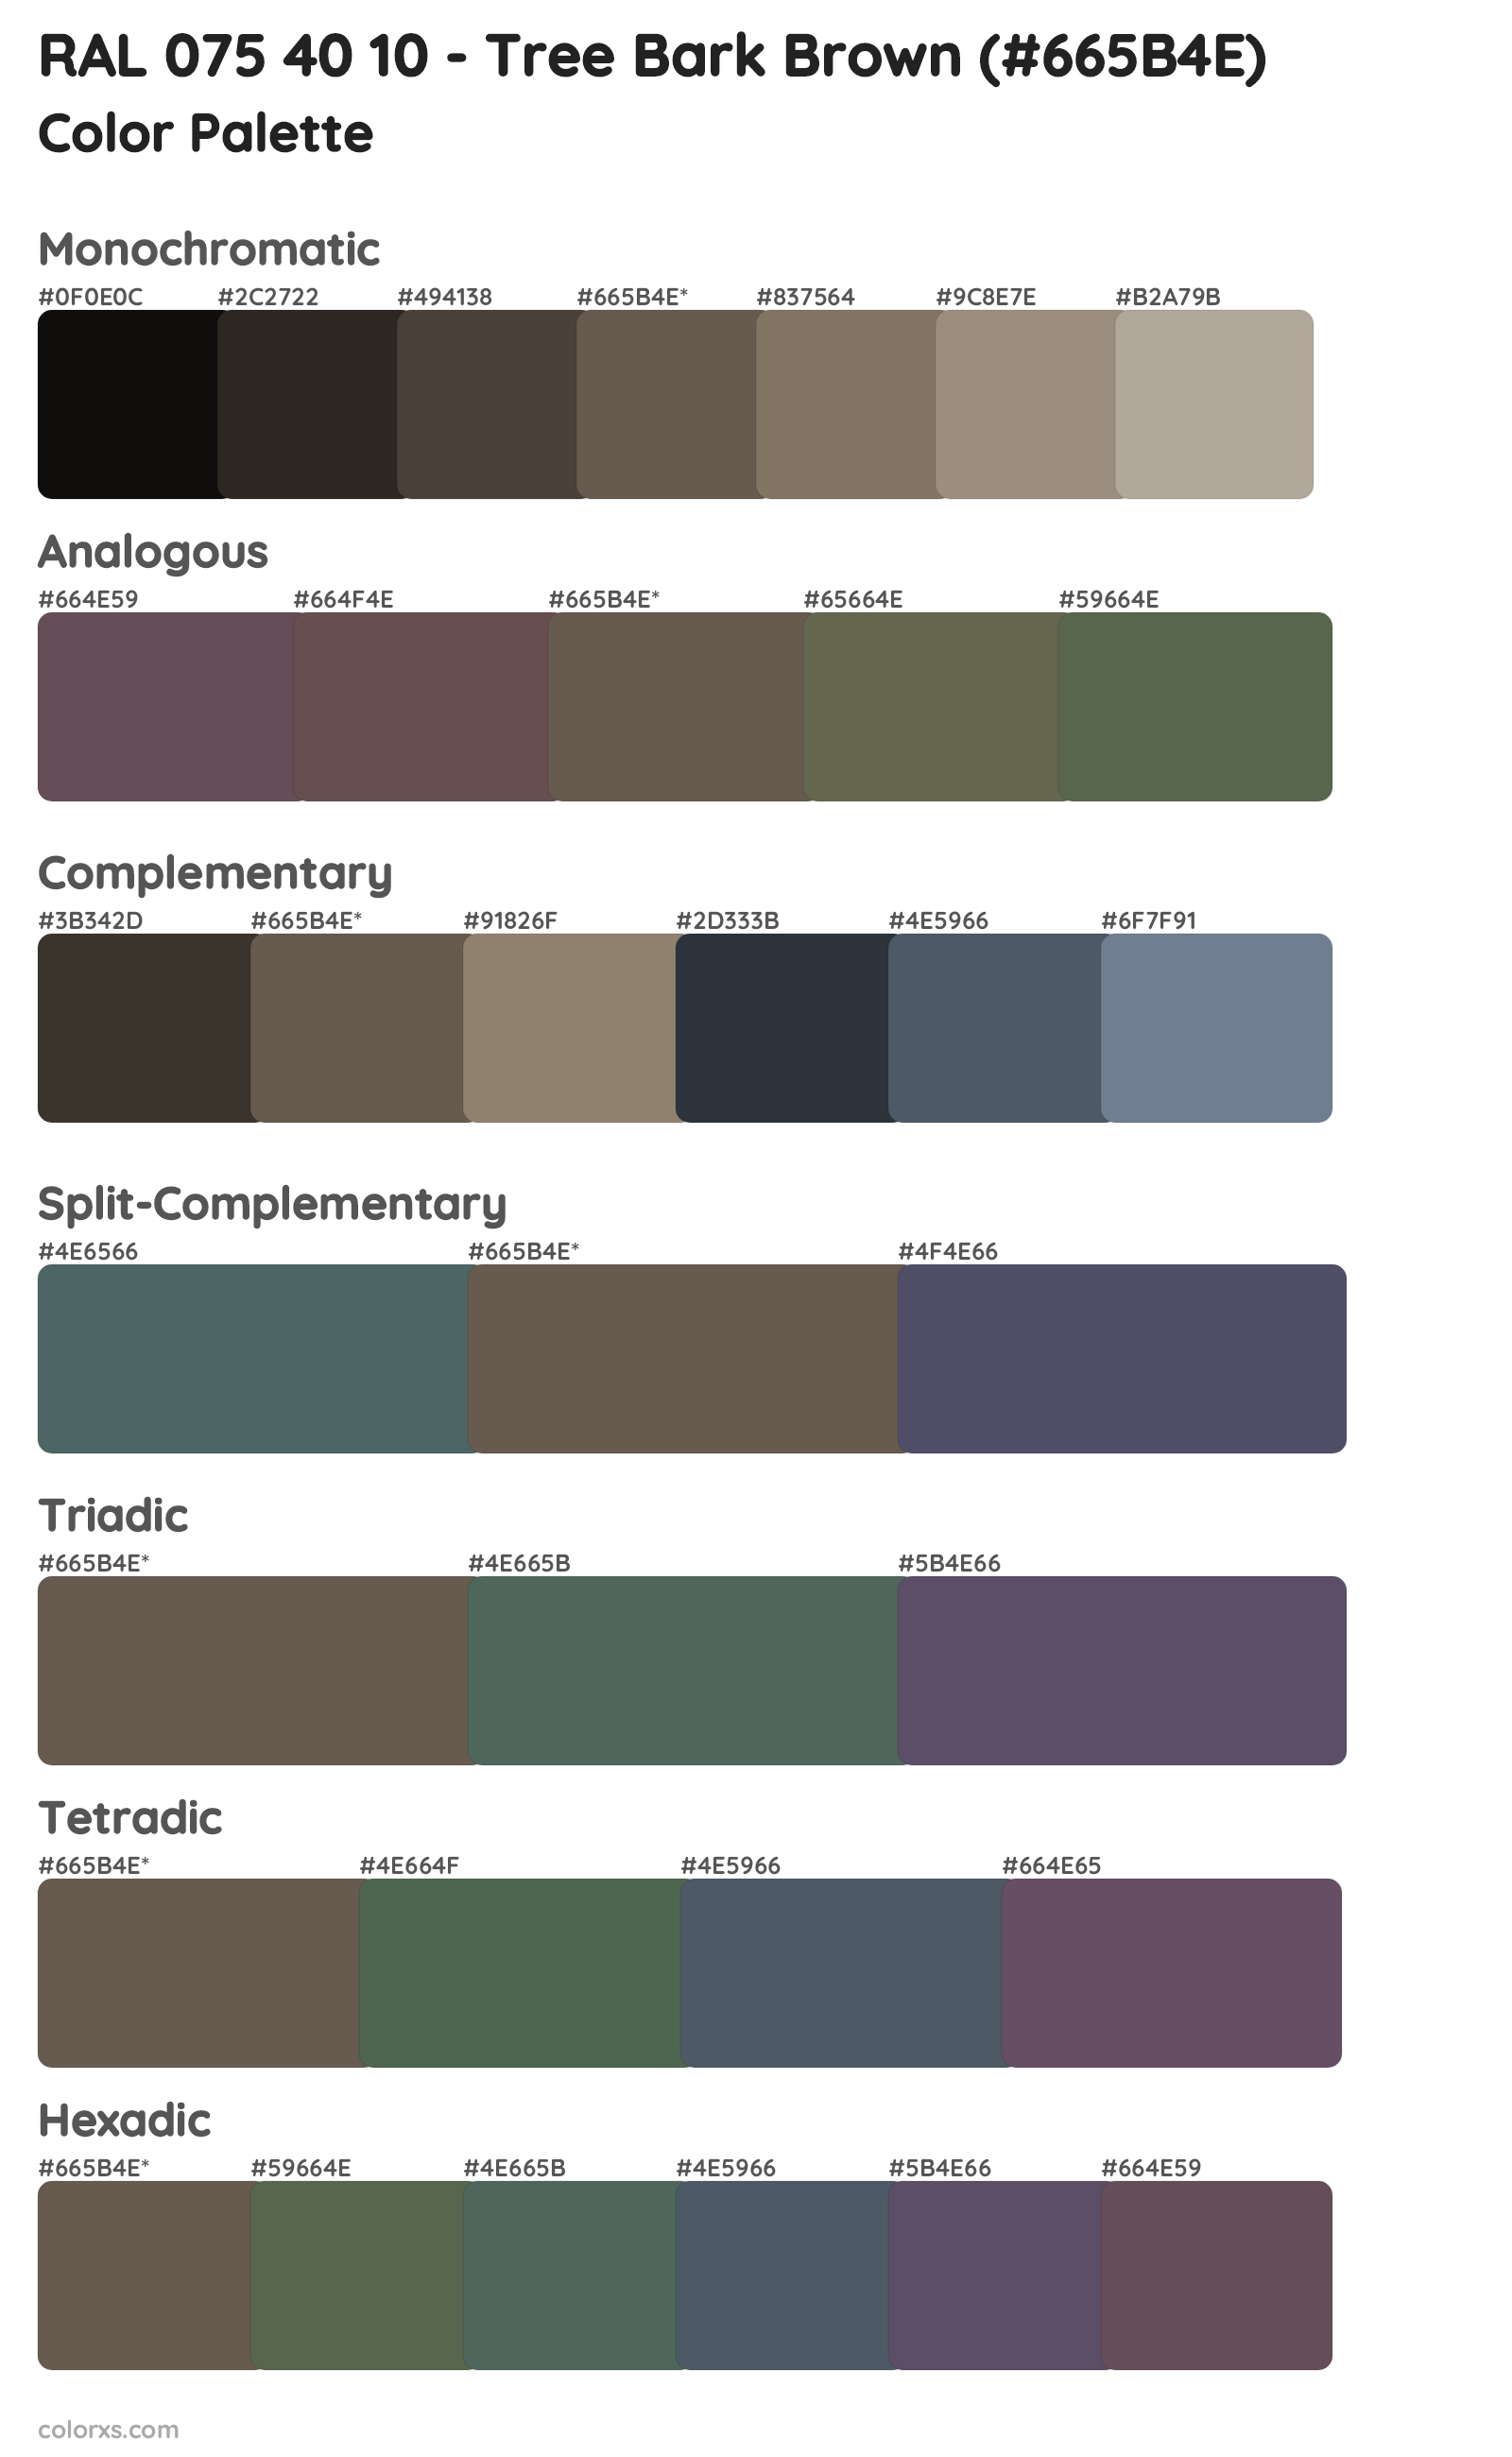 RAL 075 40 10 - Tree Bark Brown Color Scheme Palettes